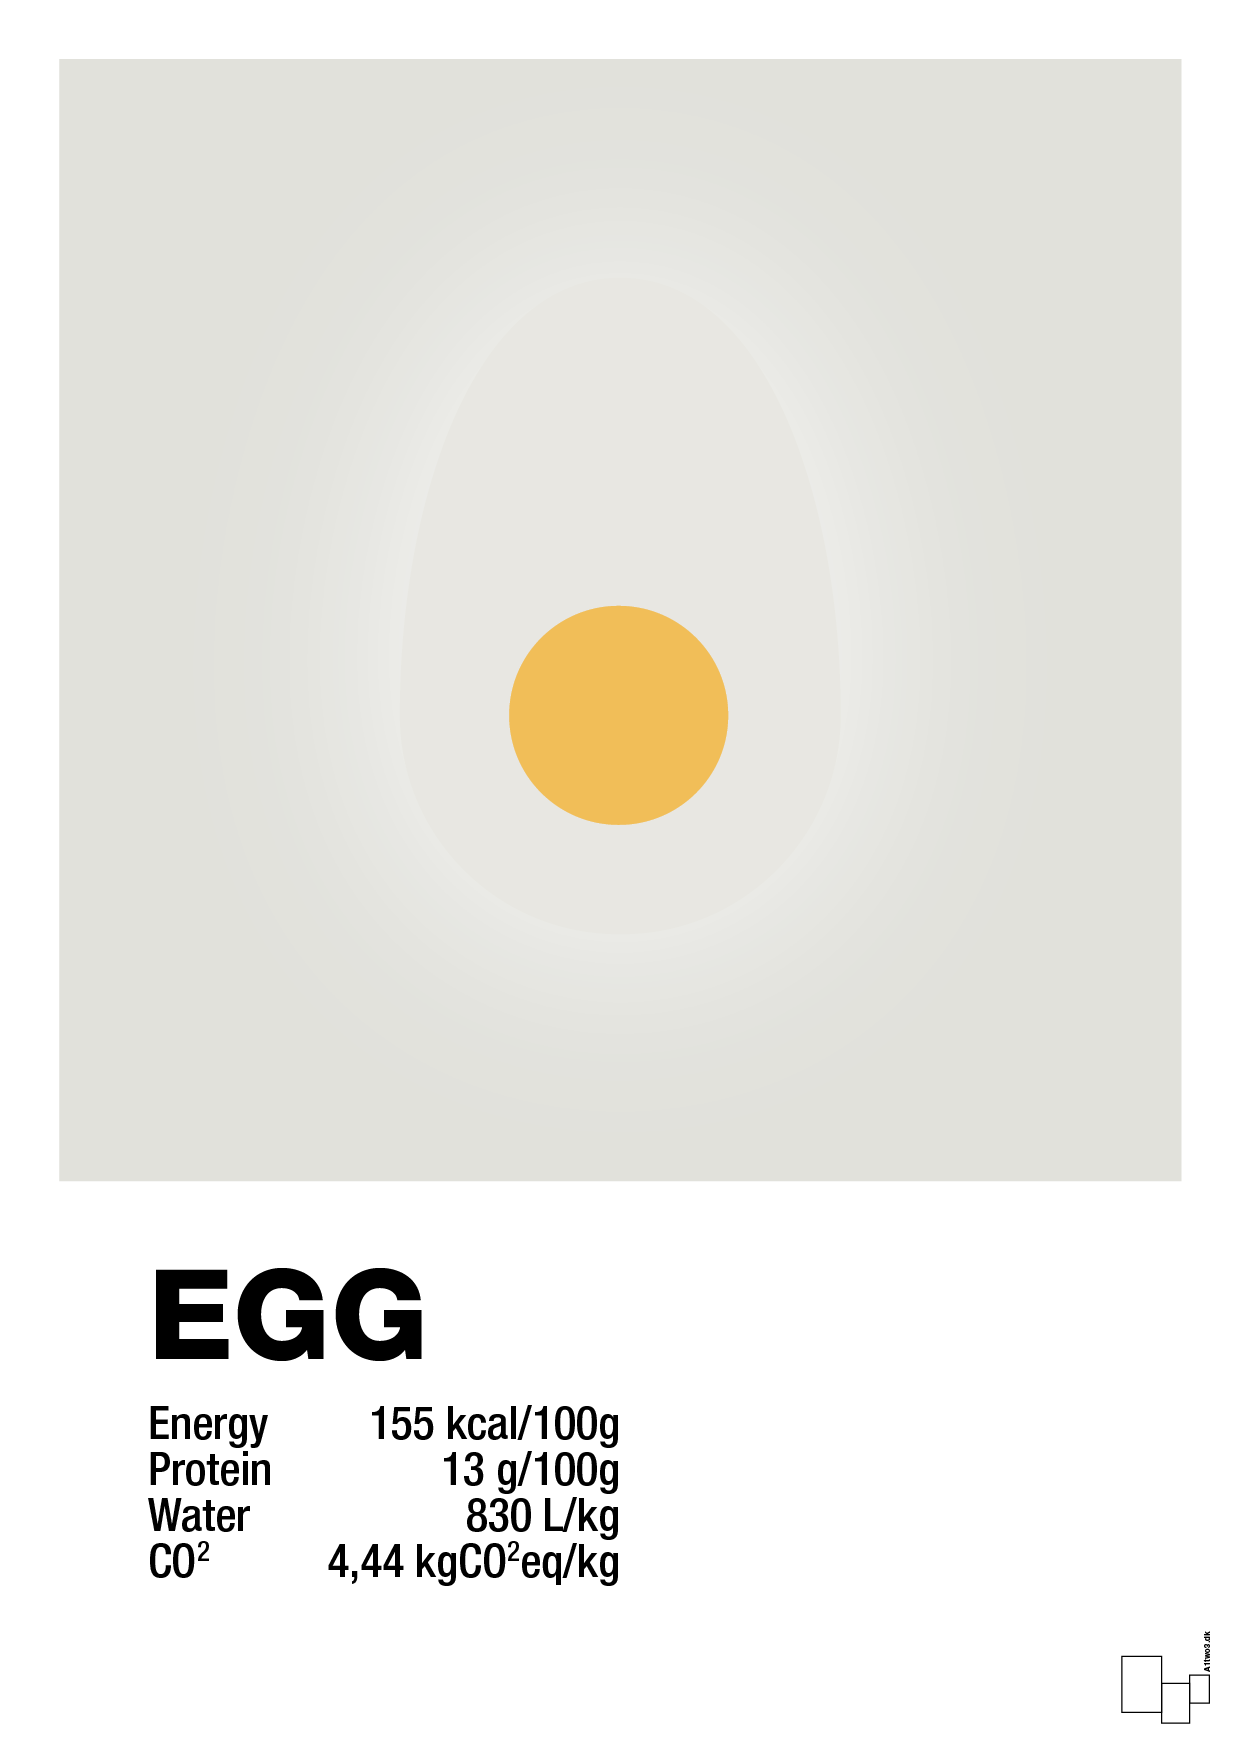 egg nutrition og miljø - Plakat med Mad & Drikke i Painters White